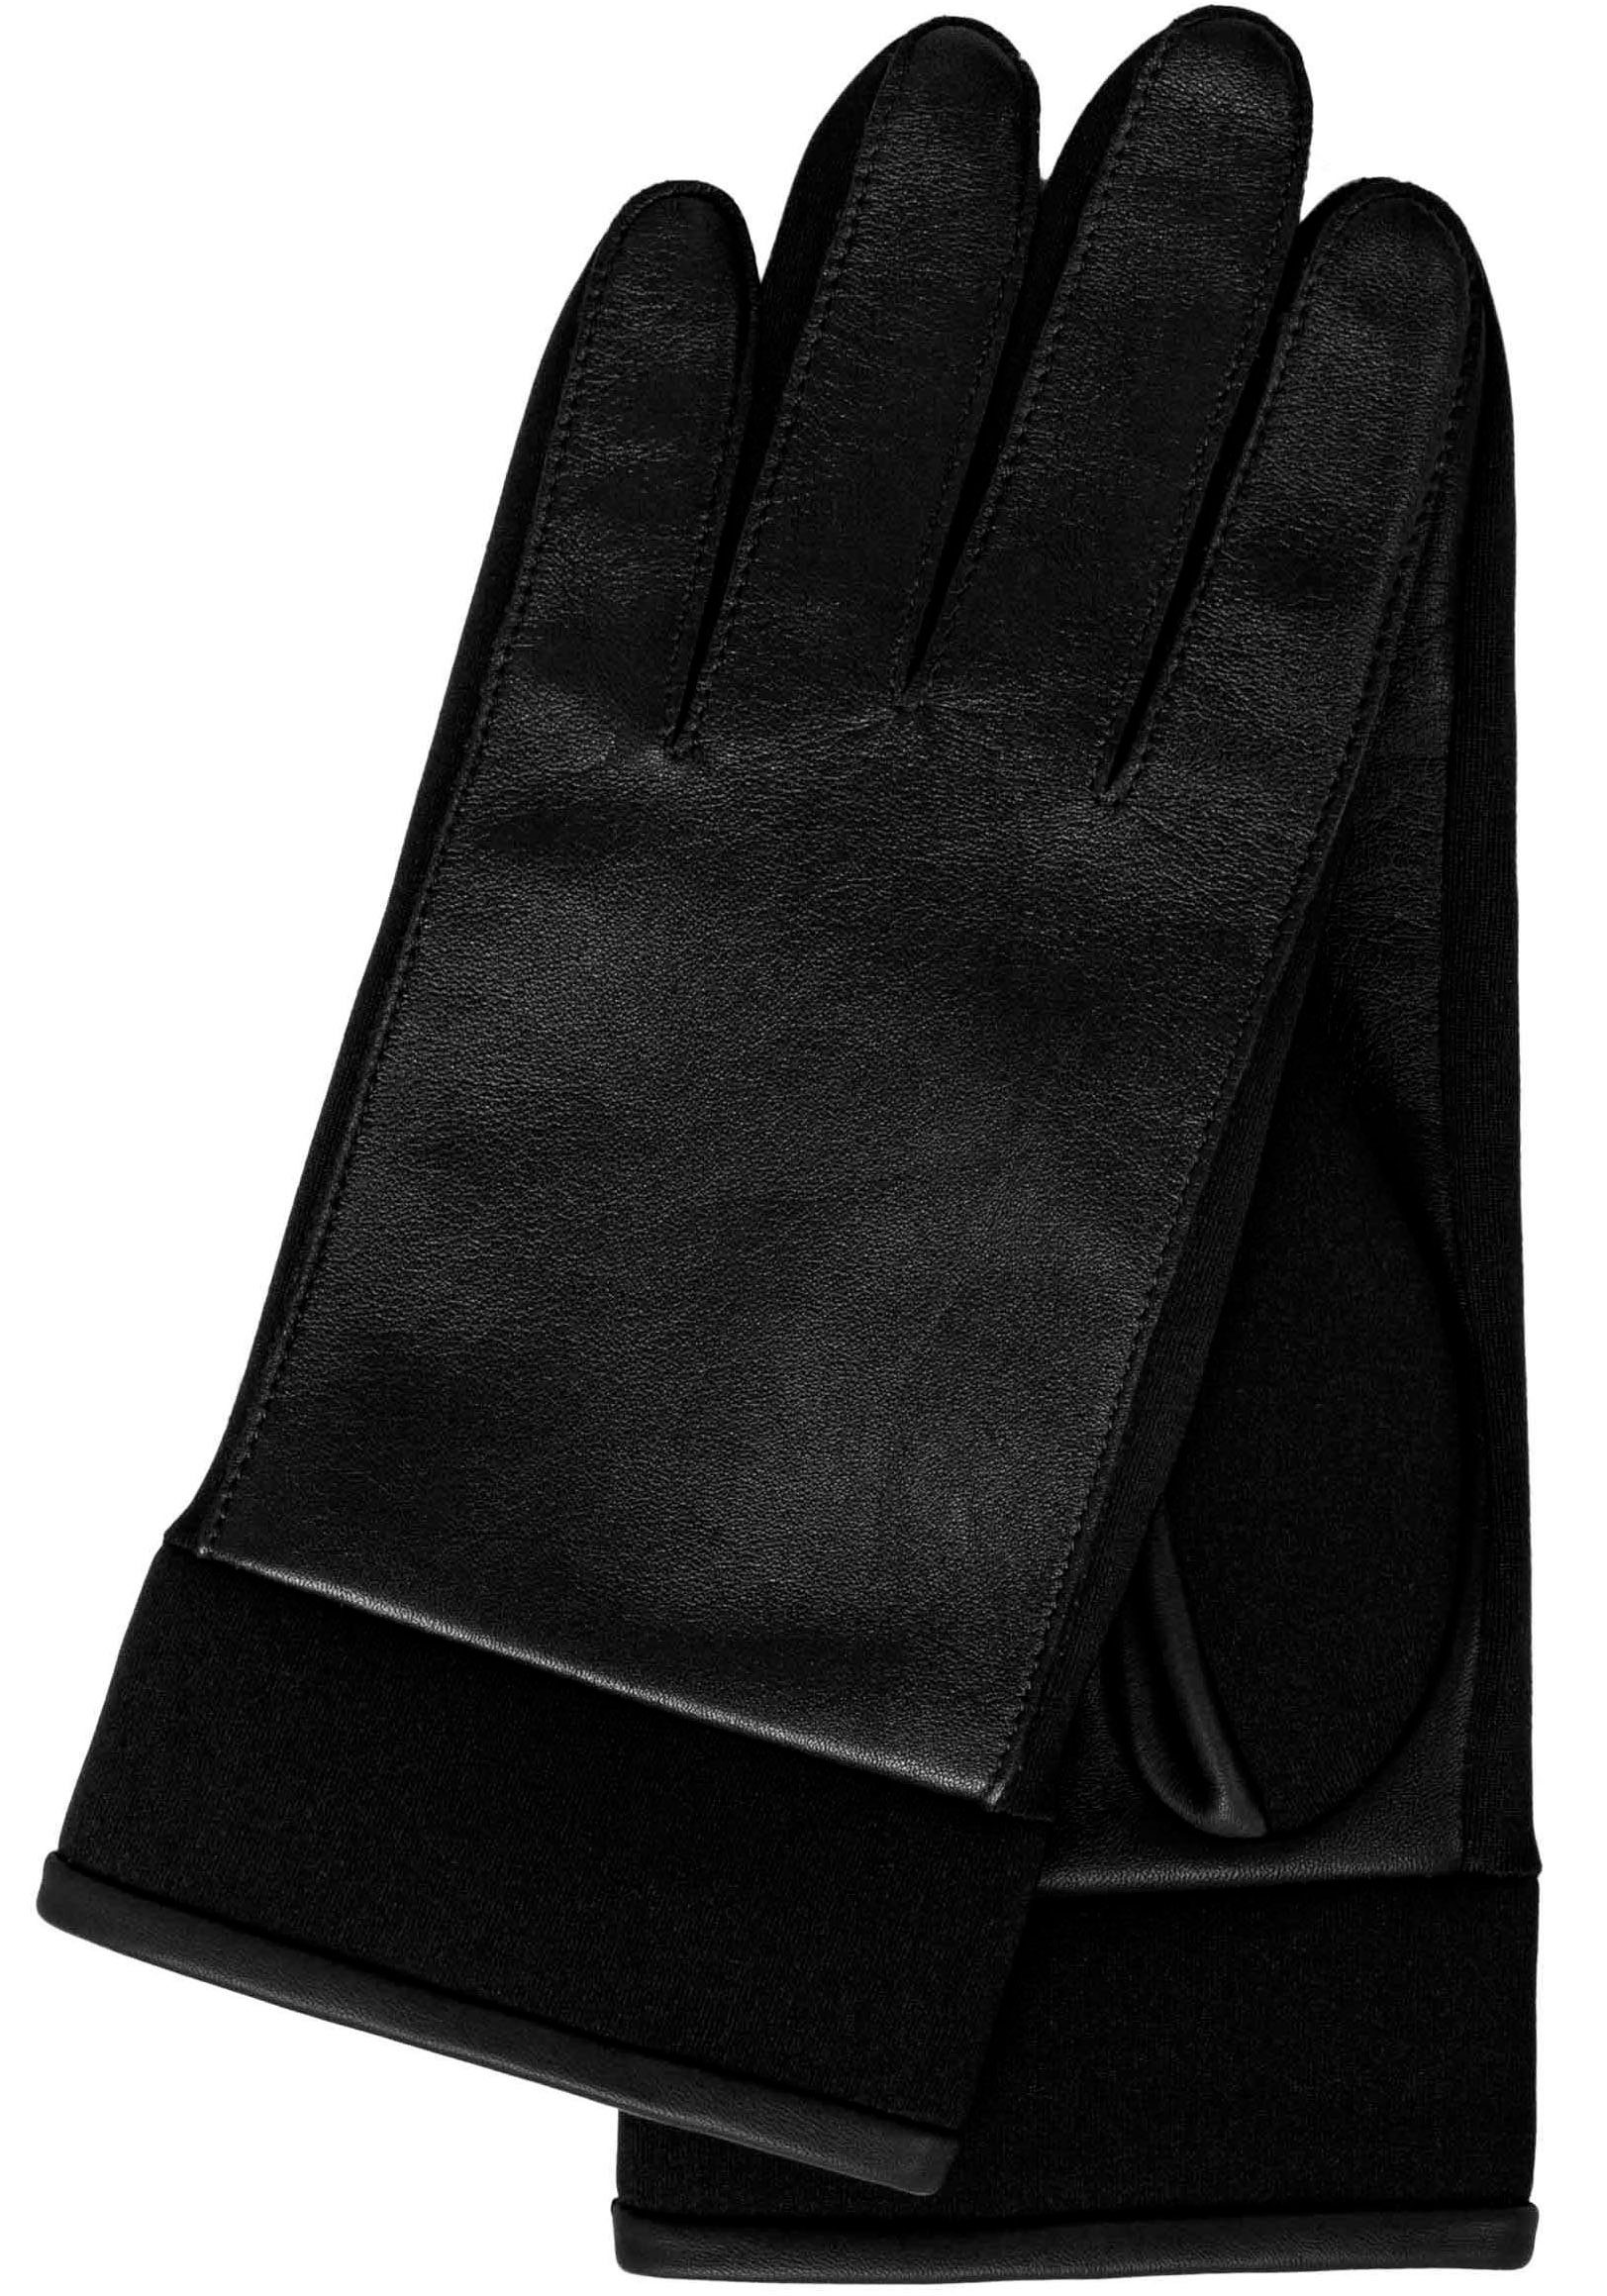 KESSLER Lederhandschuhe Leif Neopreneinsätze, Urbaner Streetstyle-  Handschuh in Kombination aus Lammleder und Neopren | Handschuhe